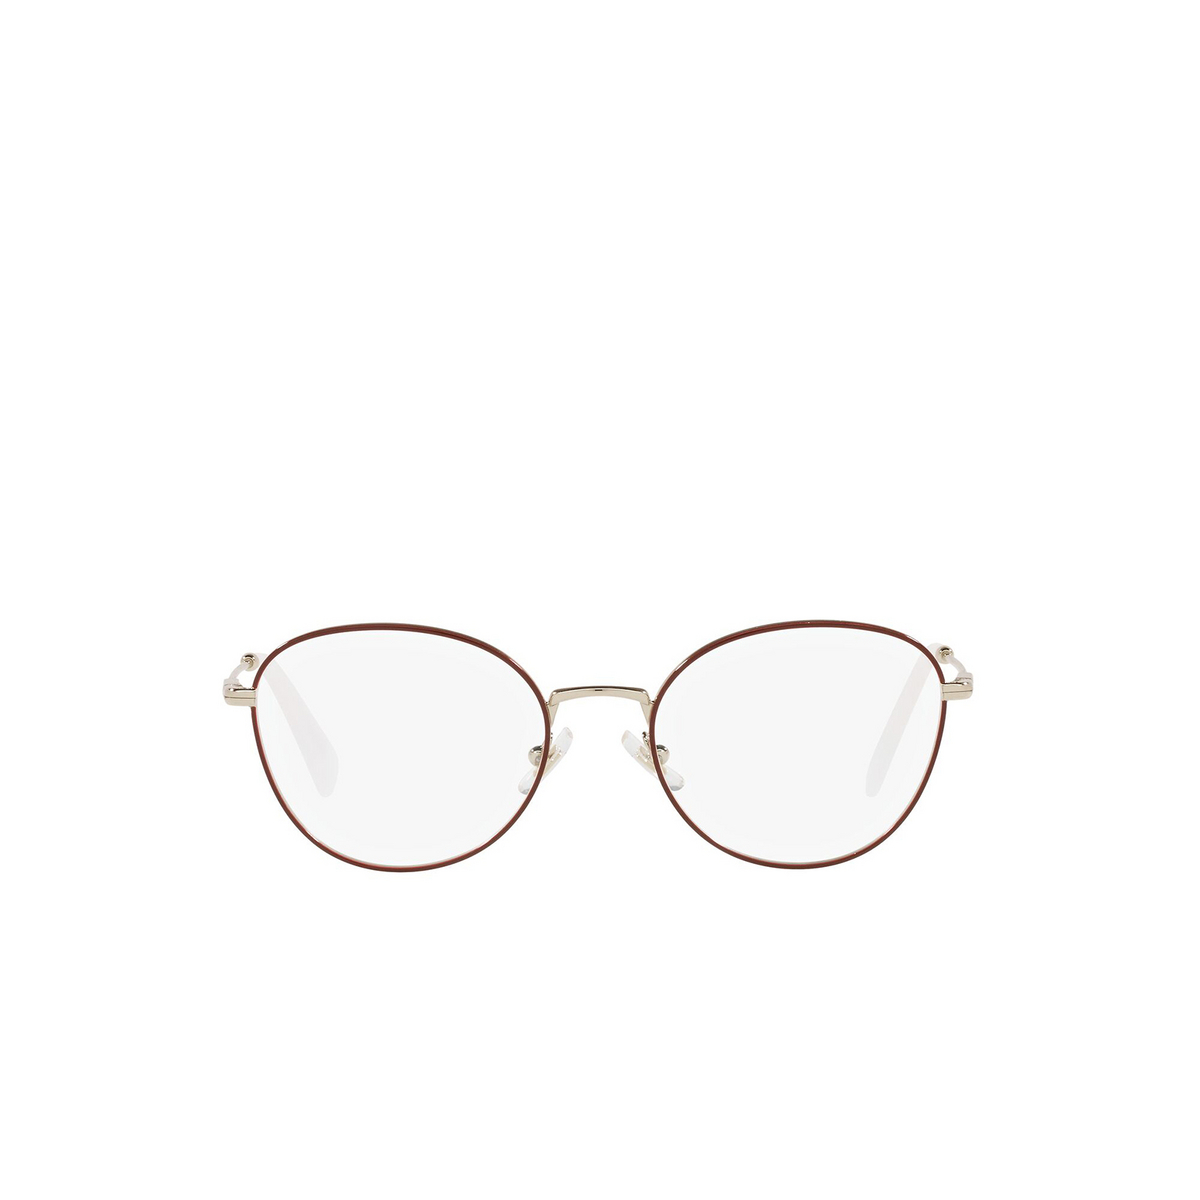 Miu Miu® Cat-eye Eyeglasses: MU 50UV color Bordeaux 09X1O1 - front view.